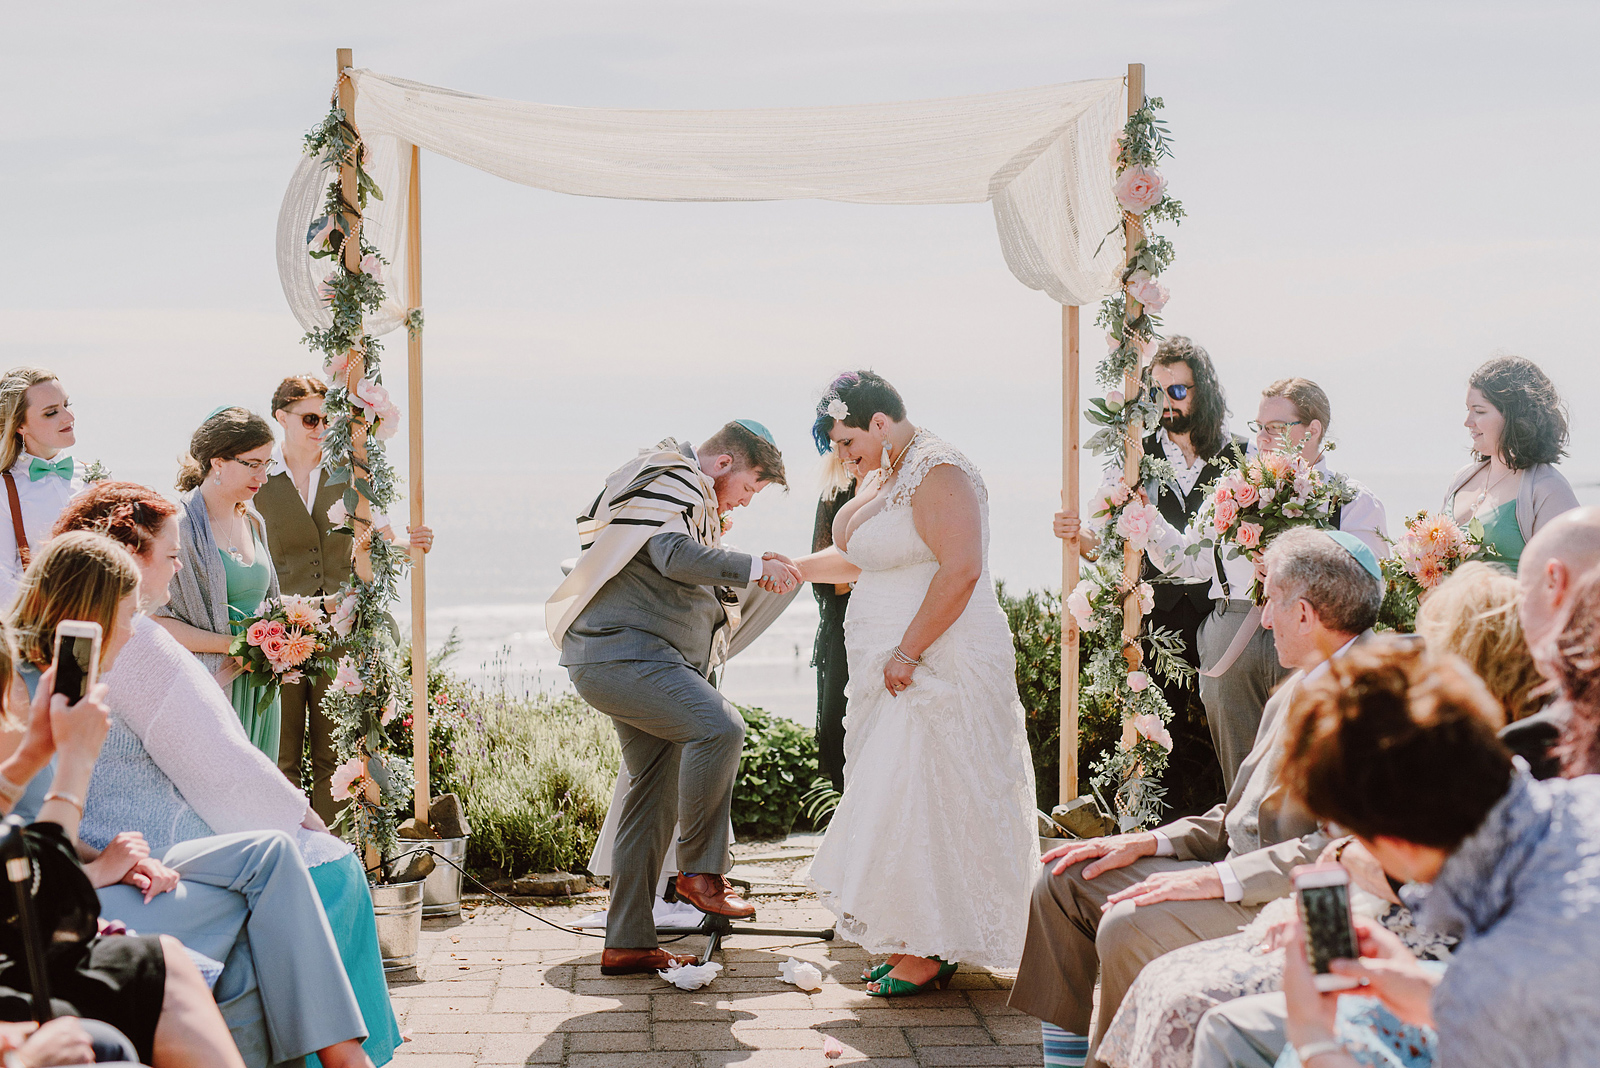 Groom smashing the ceremonial glass at a Jewish wedding - Oceanside Community Club Wedding on the Oregon Coast” title=